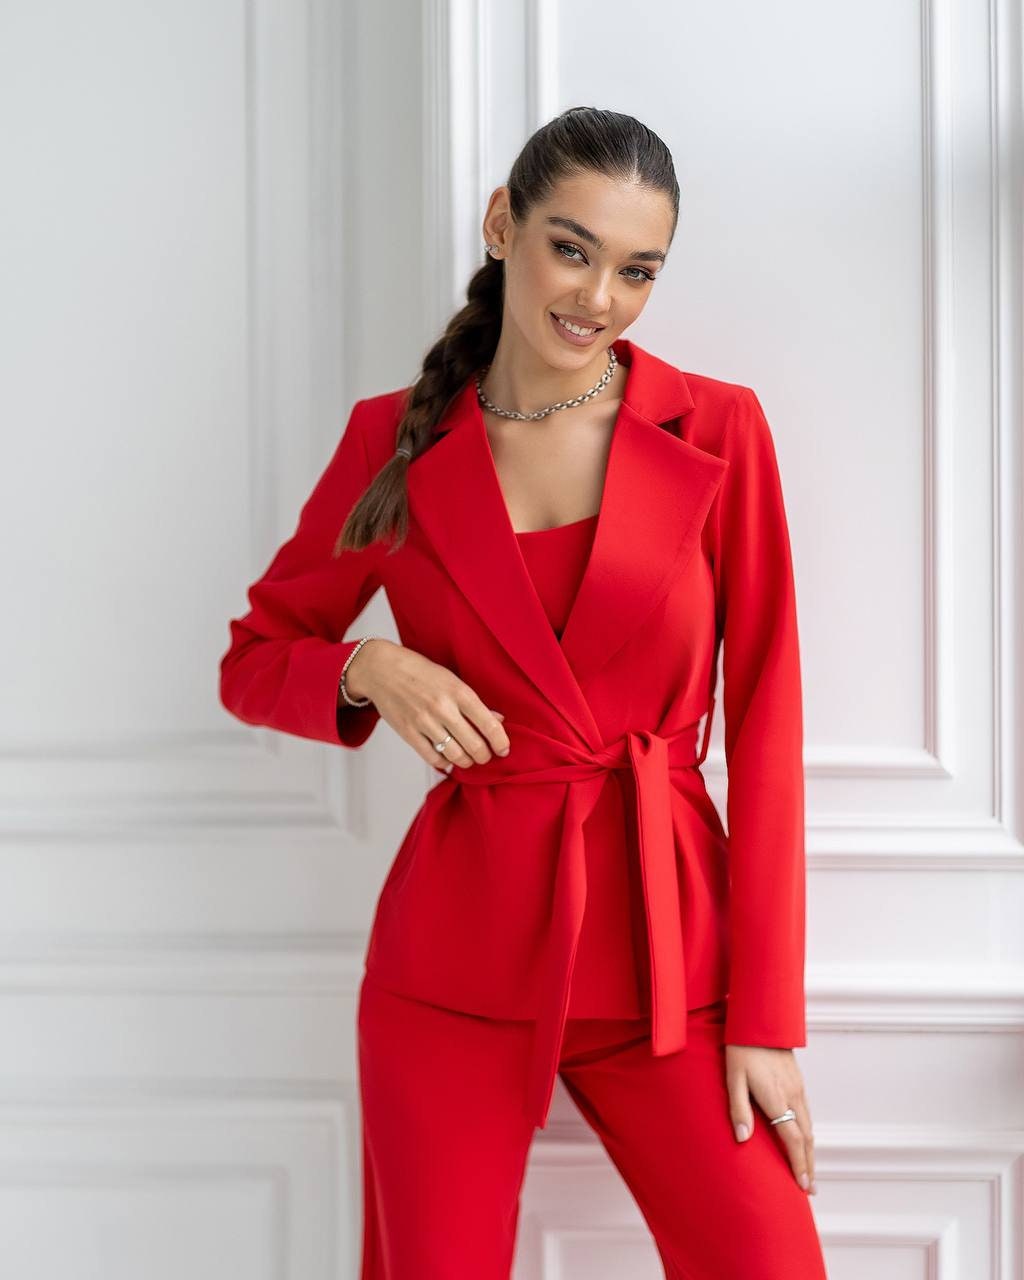 Buy Women Blazer With Corset, Bustier Top, Bralette, Women Red